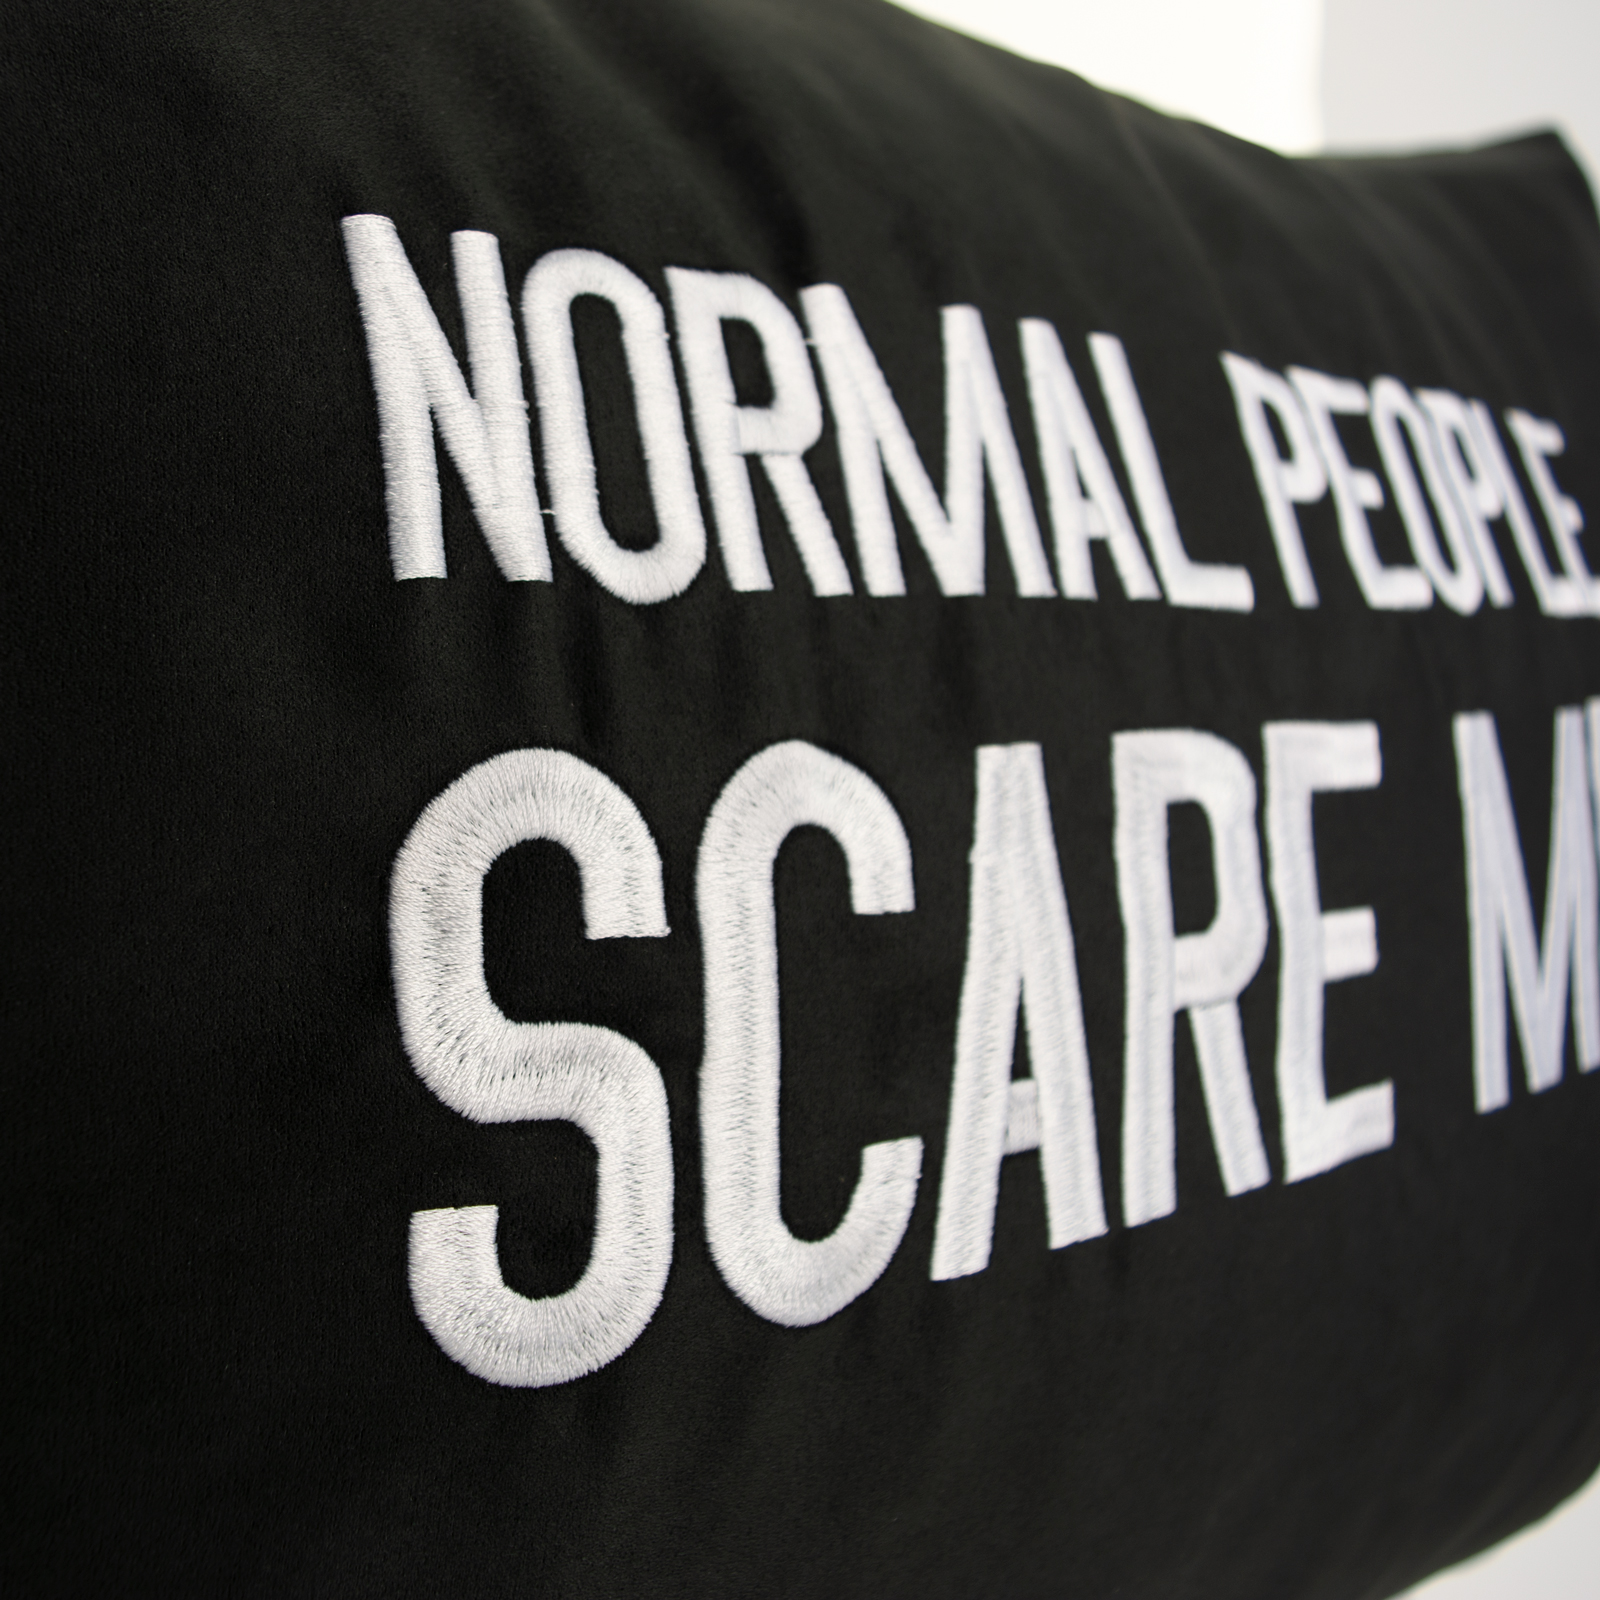 Normal people scare me - Kissen